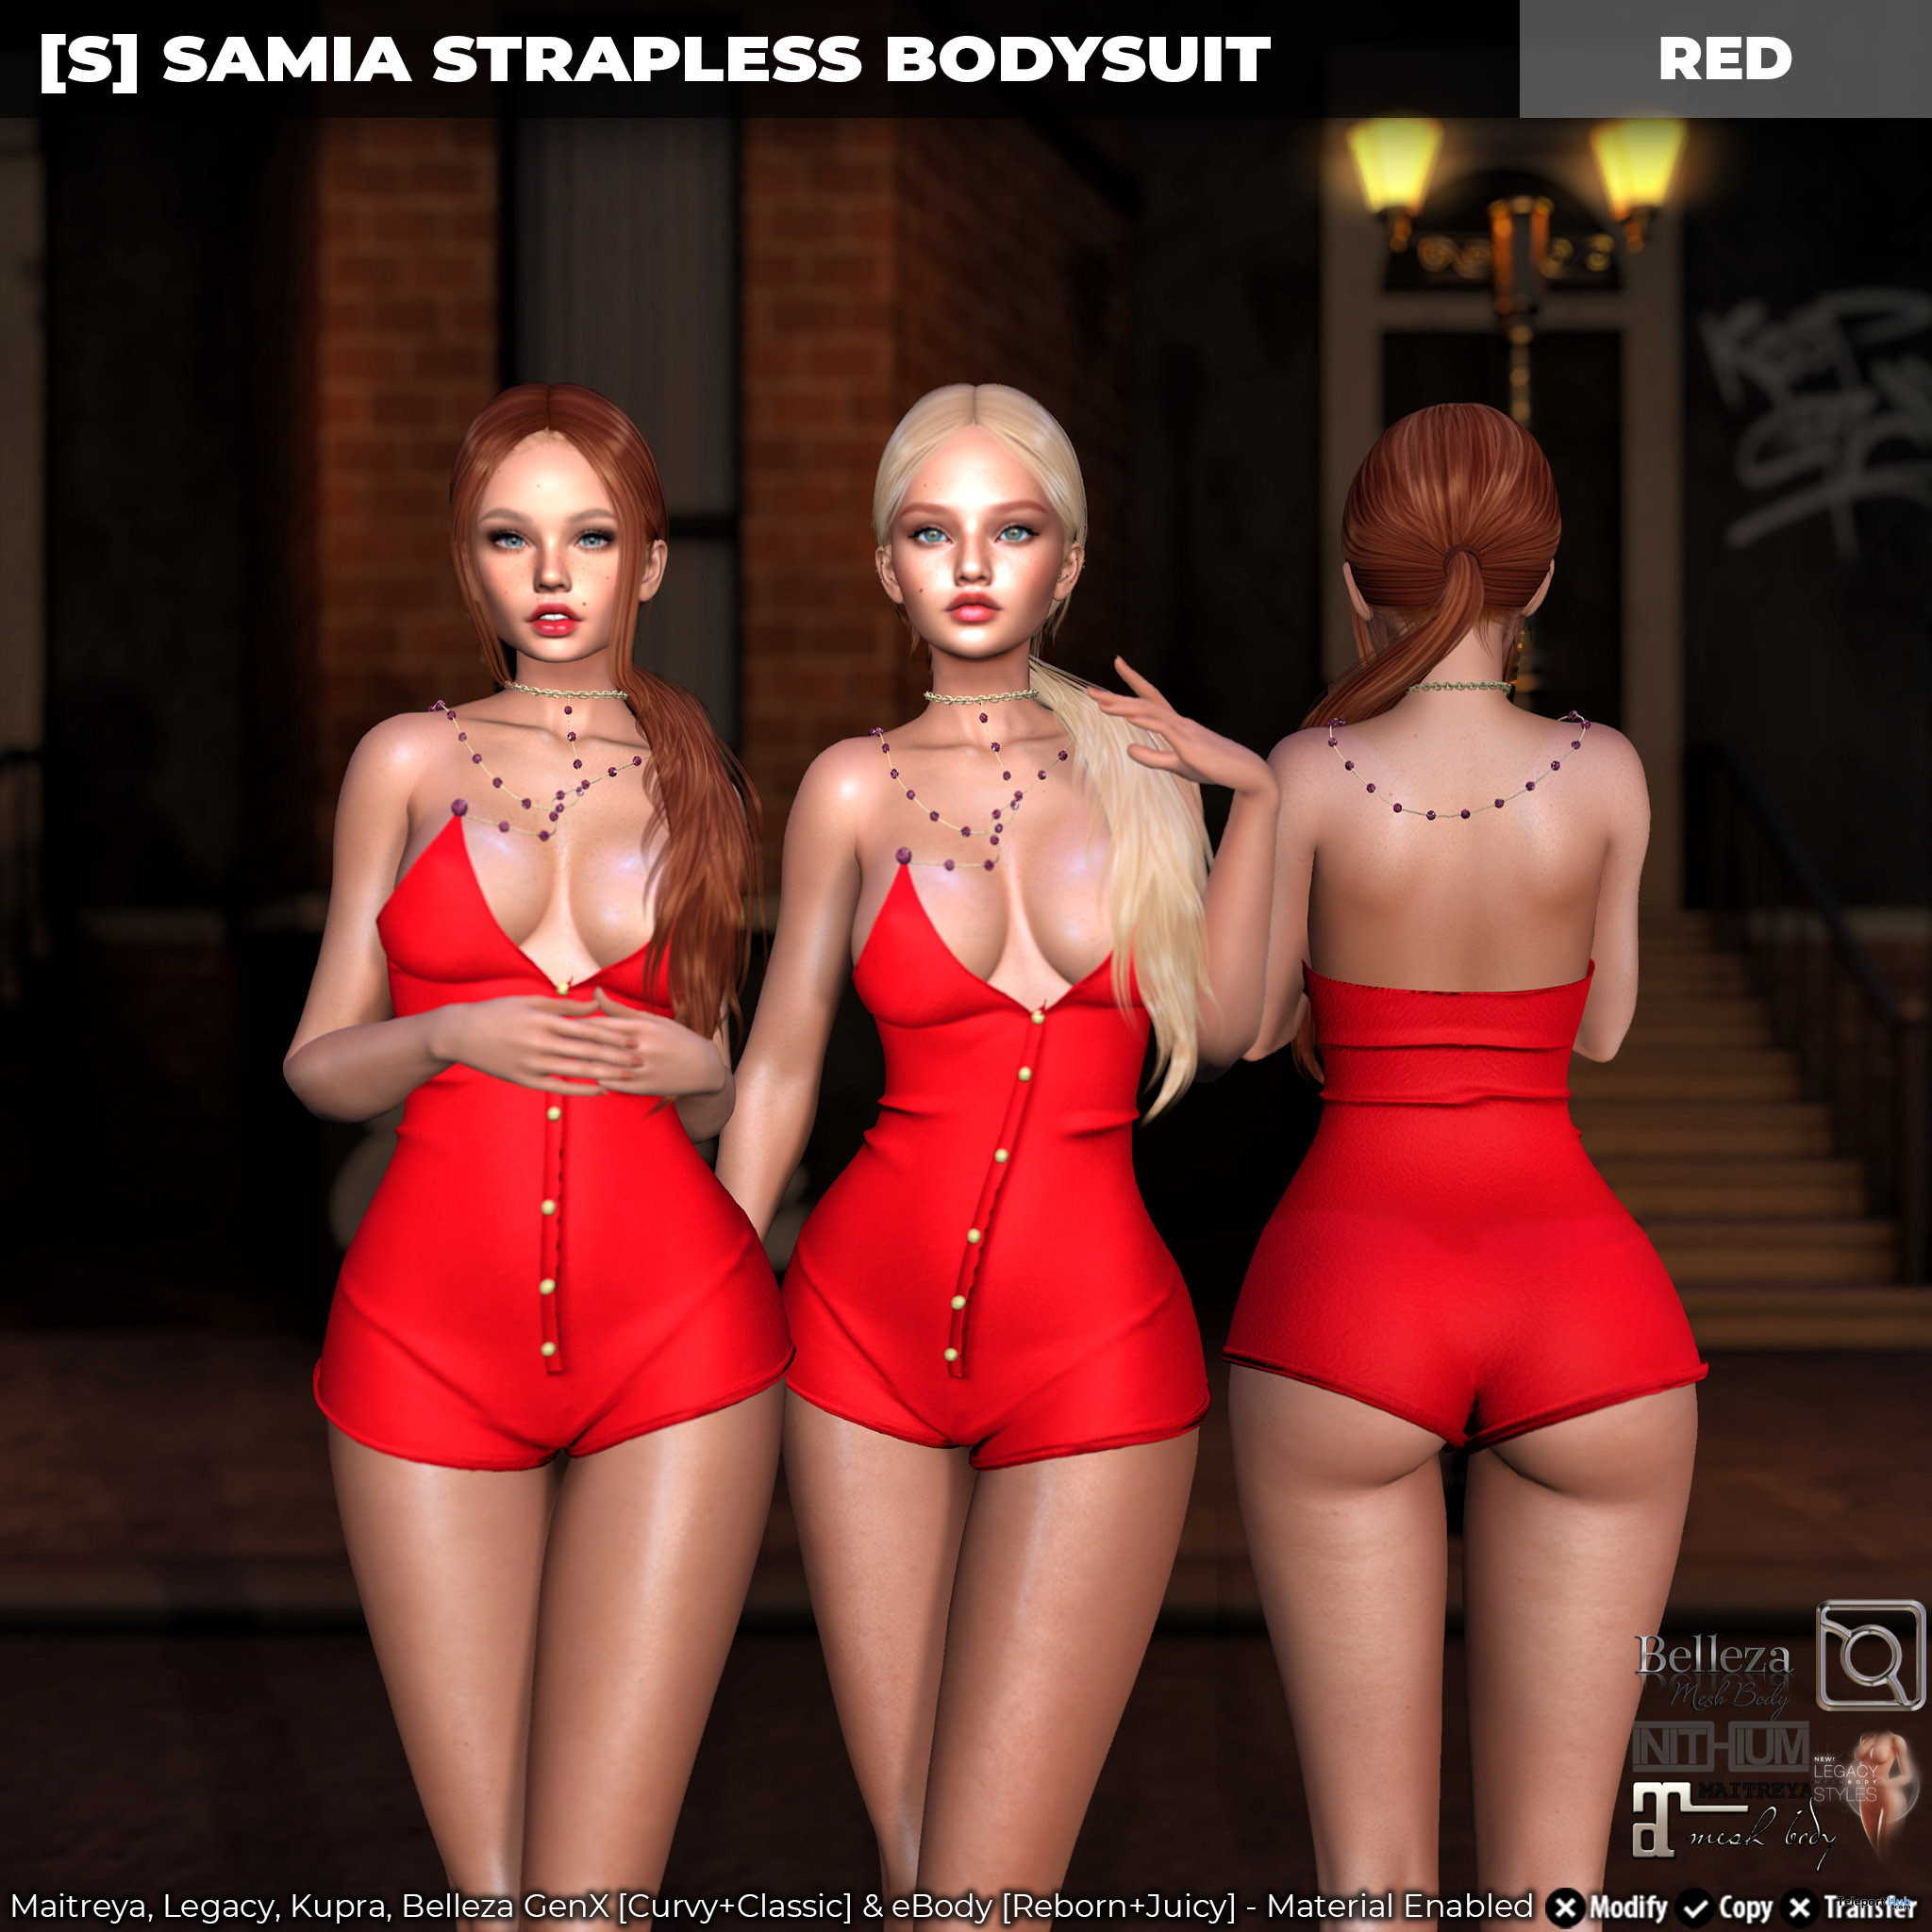 New Release: [S] Samia Strapless Bodysuit by [satus Inc]